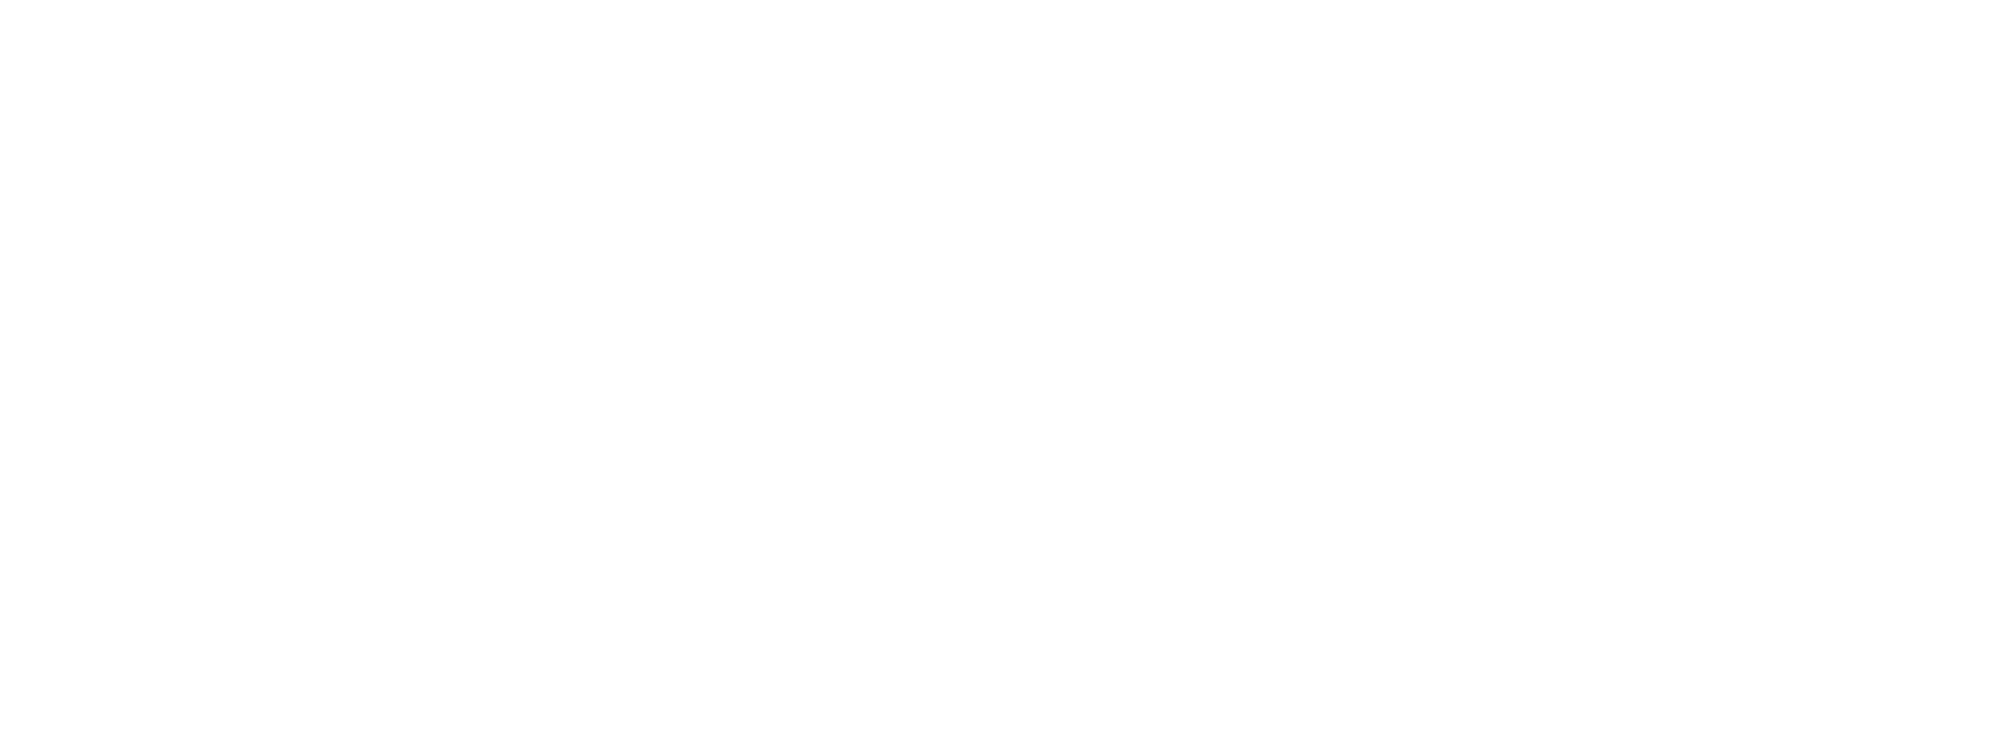 Life Groups Logo